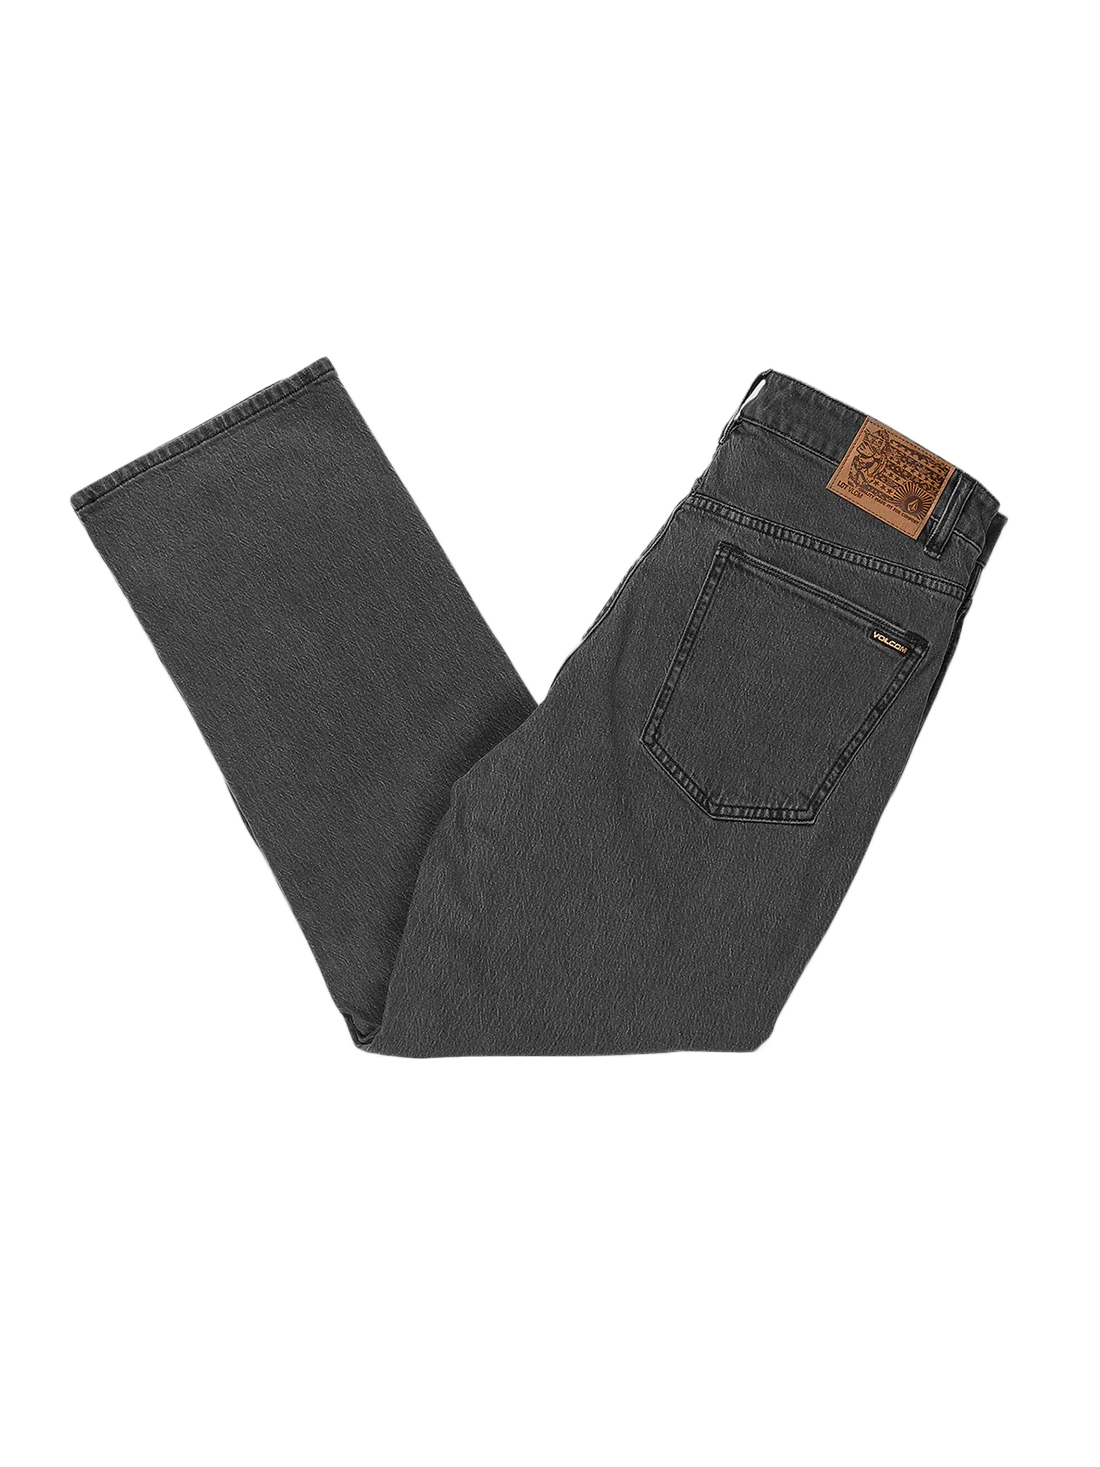 Kritisere Sober en kop Volcom Nailer Jeans - Stoney Black - WeAreCivil.com